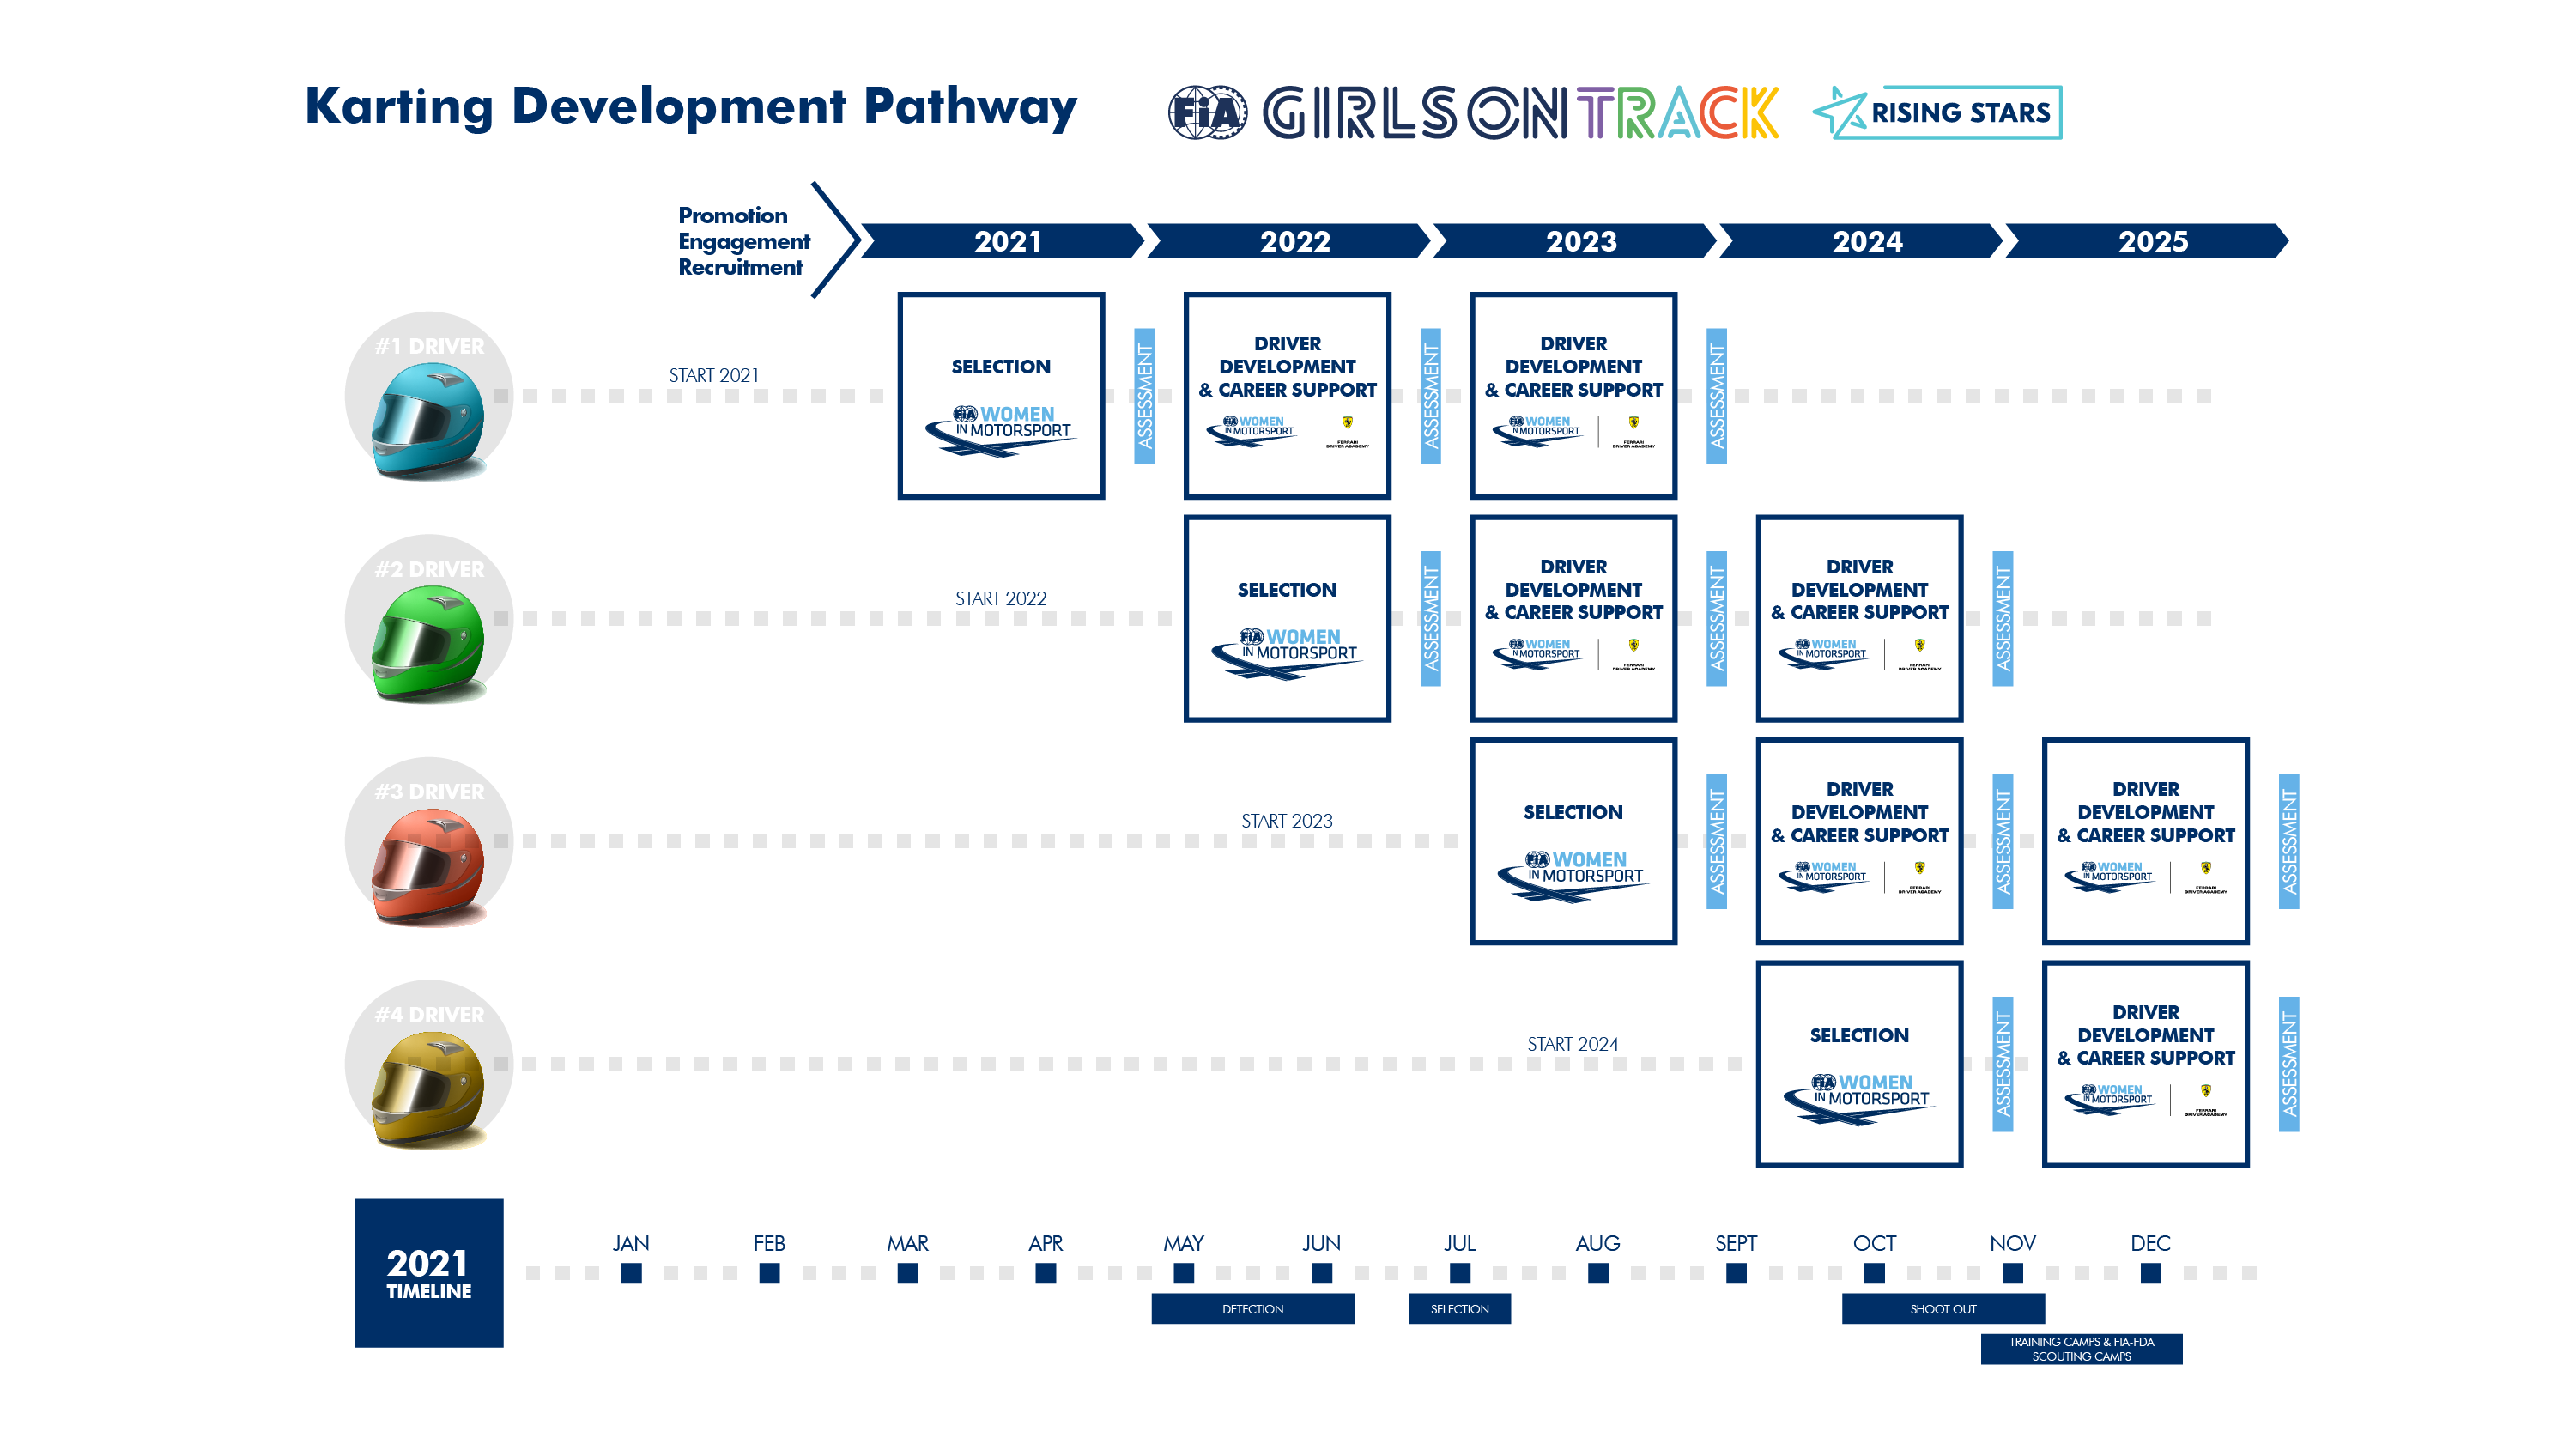 Karting development pathway